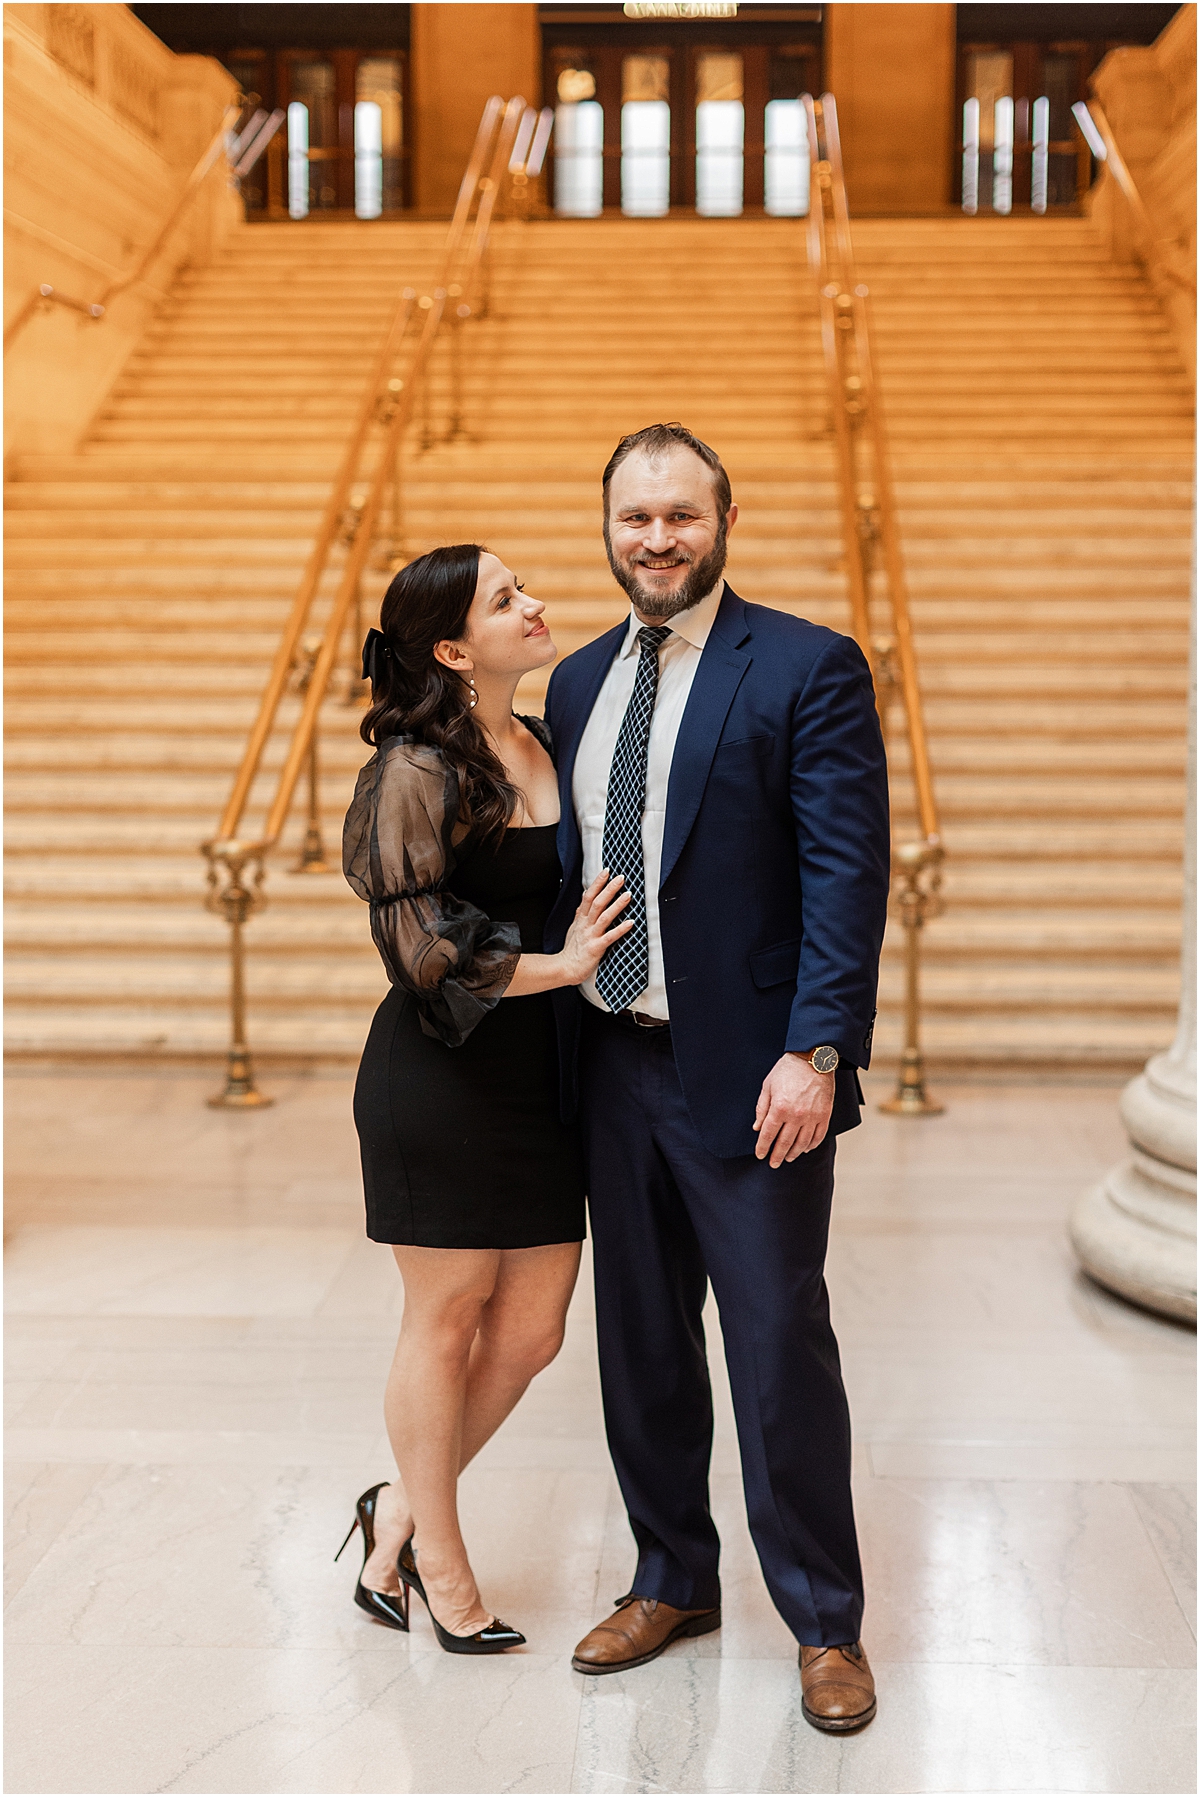 Chicago wedding photographer captures couple's Engagement photos 